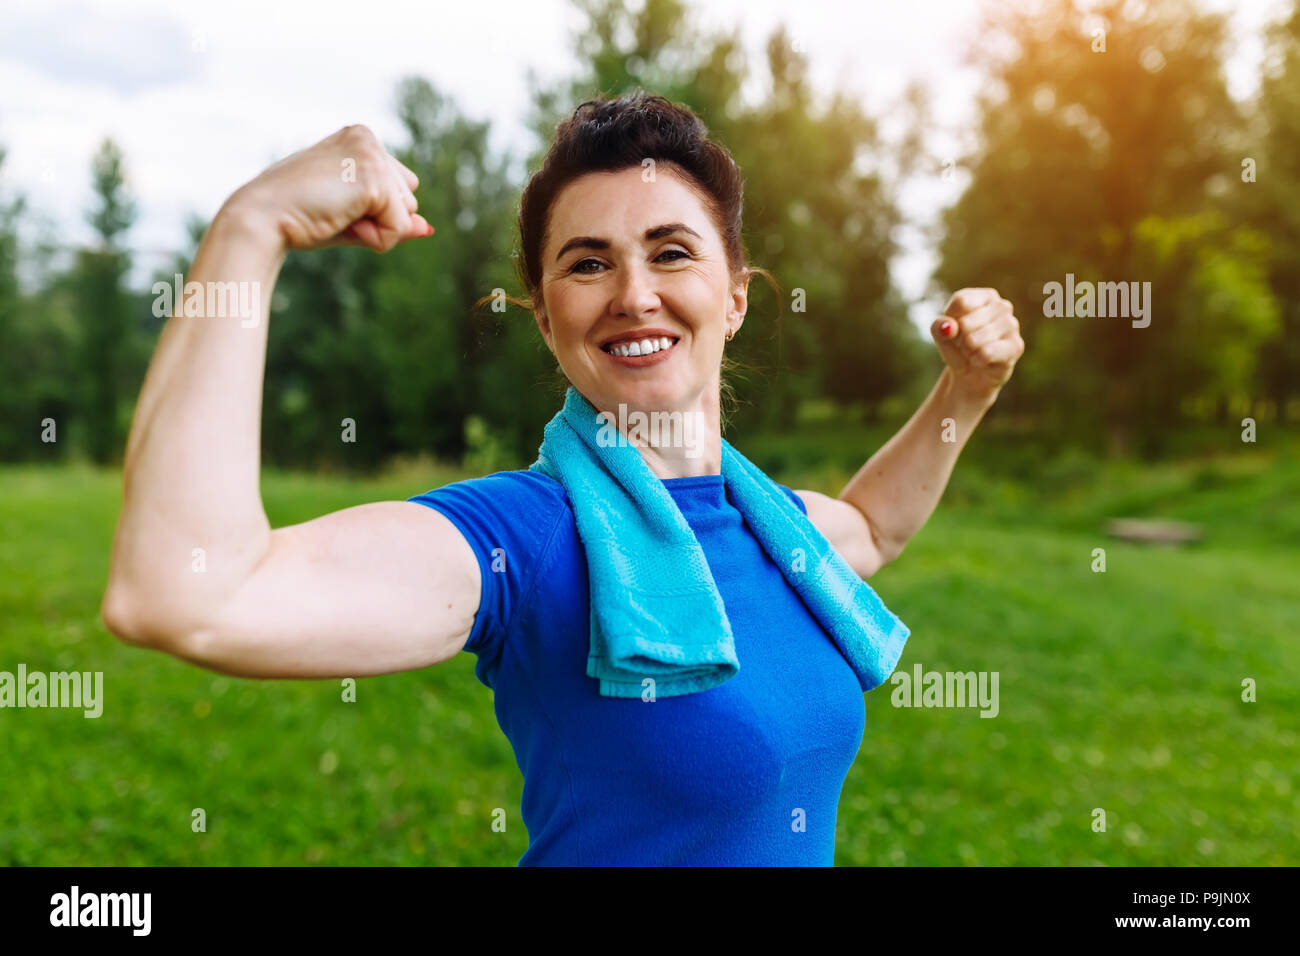 Premium Photo  Women power. smiling pretty girl flexing biceps